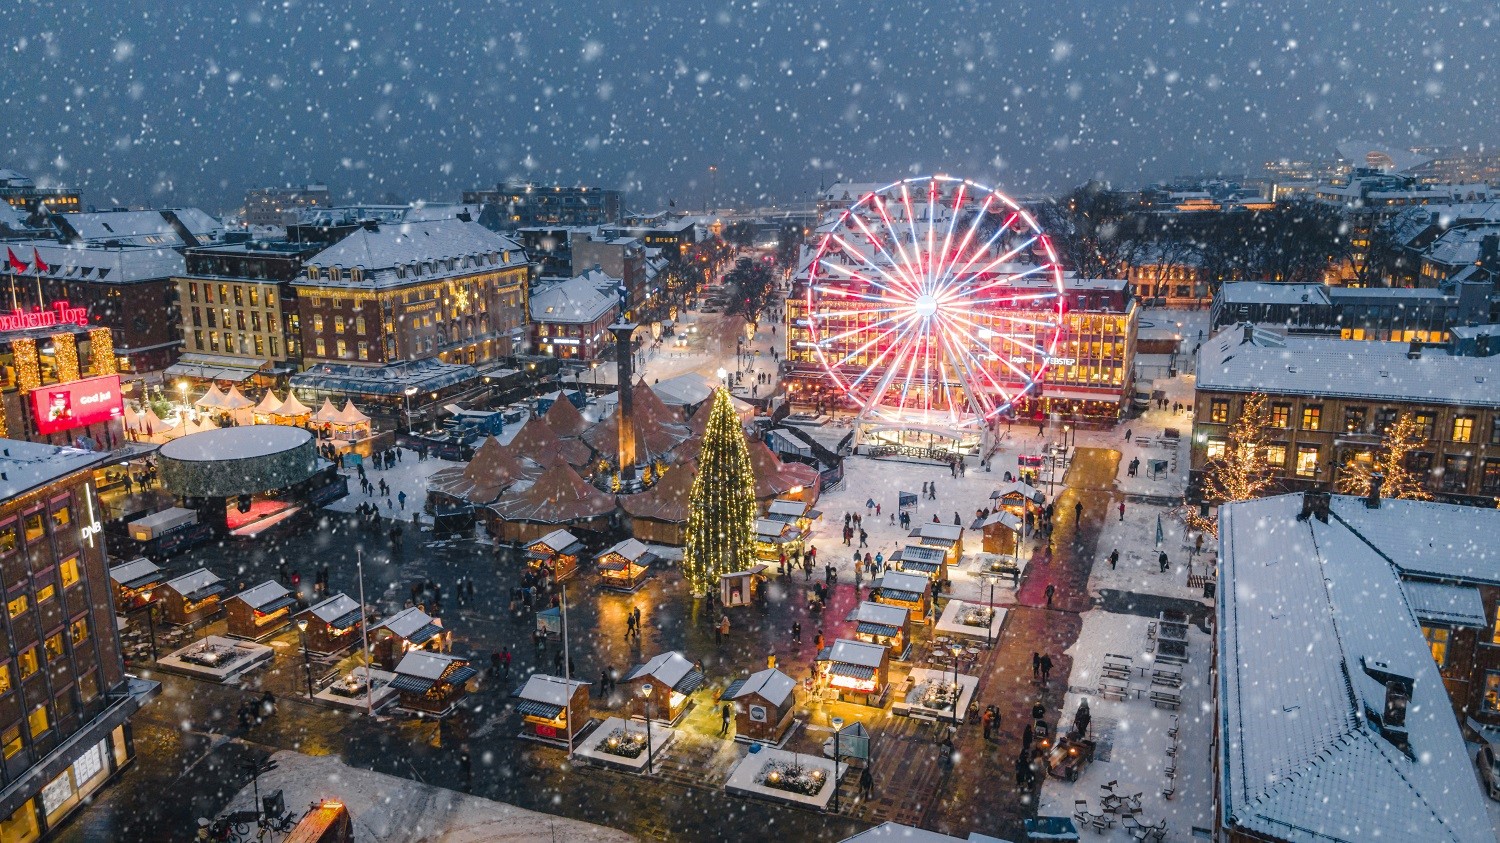 Trondheim Christmas market, with its giant Ferris wheel